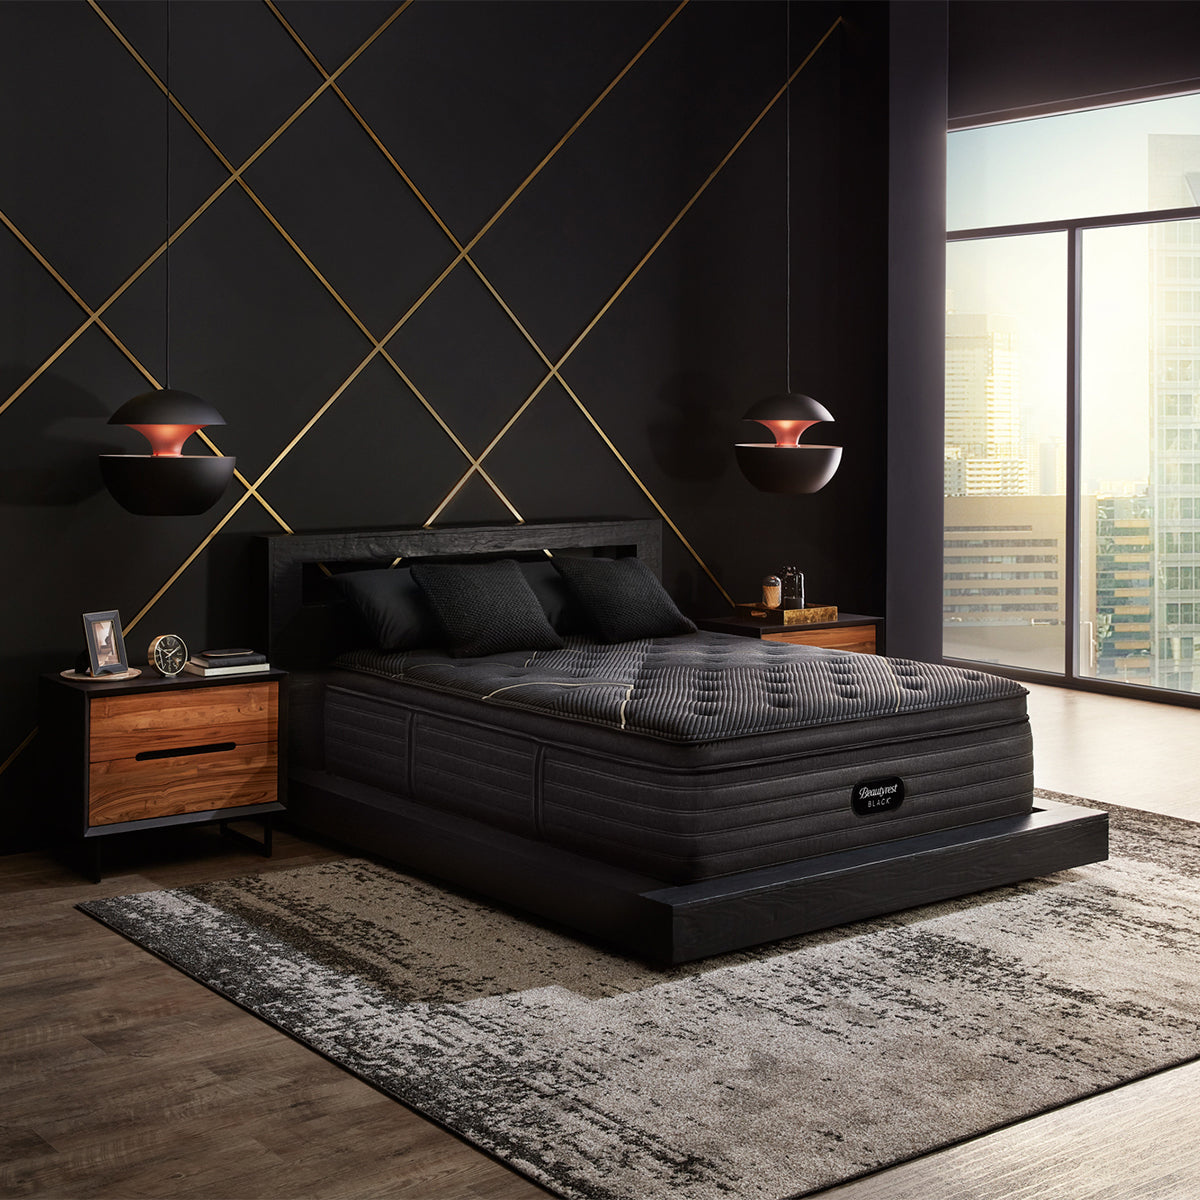 Beautyrest Black K-Class Firm Pillow Top Mattress On Bed Frame In Bedroom